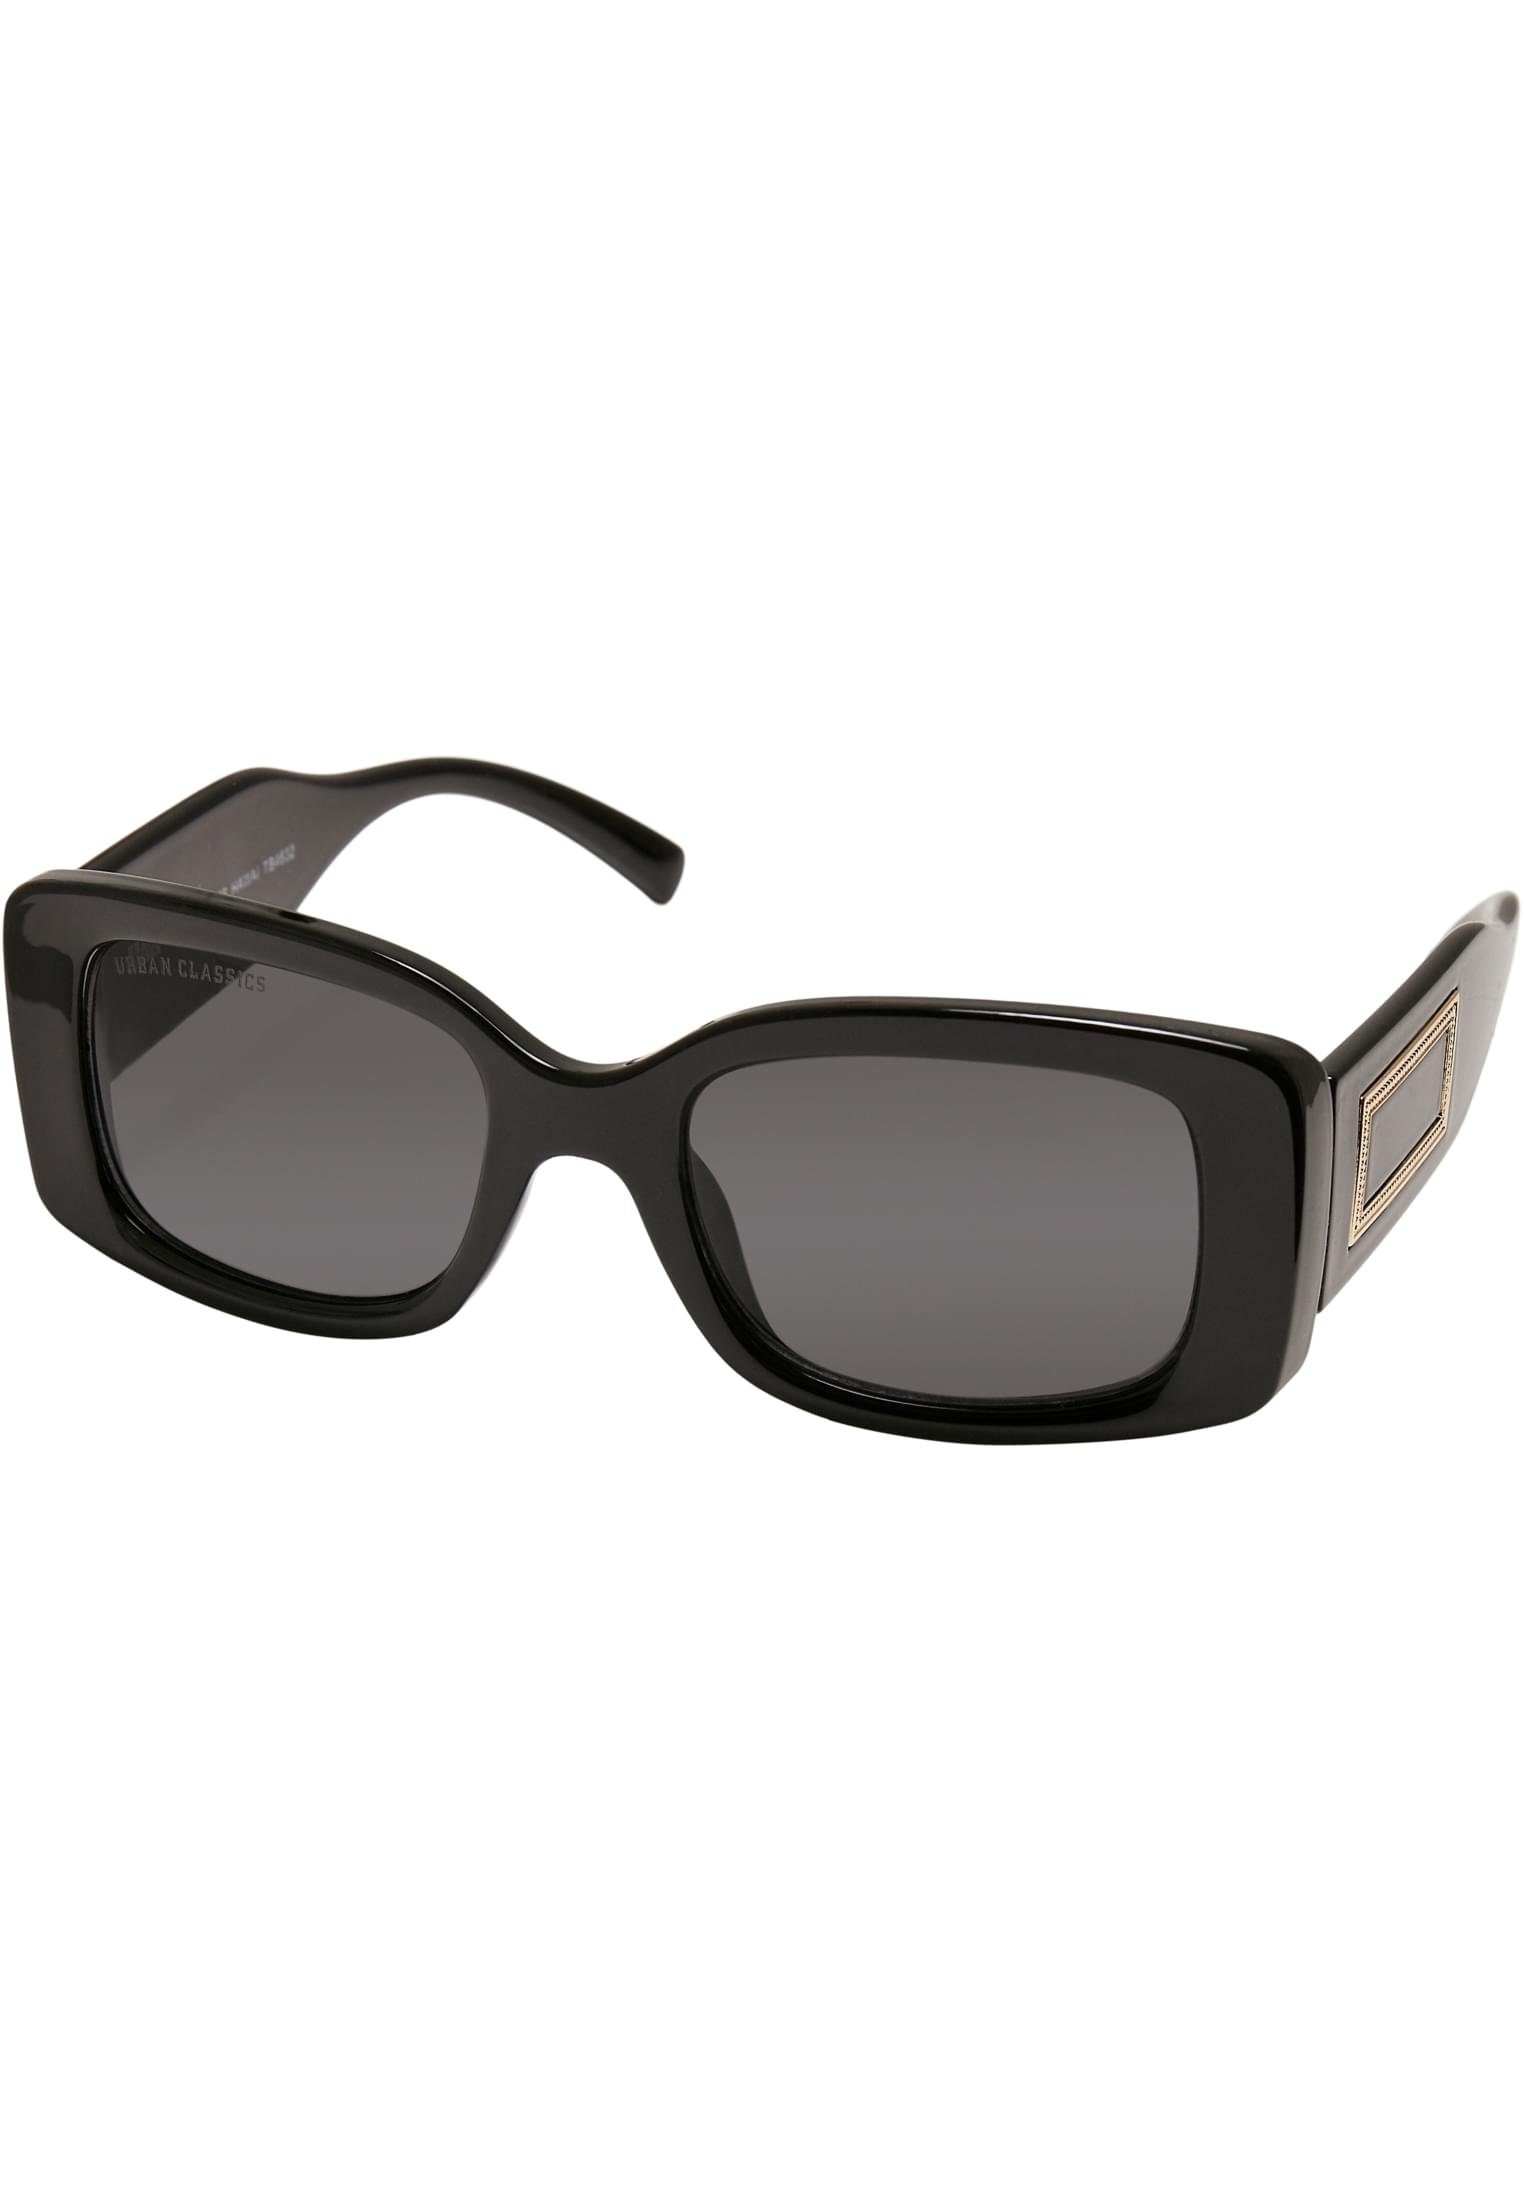 Unisex Sunglasses Sonnenbrille URBAN Hawai CLASSICS